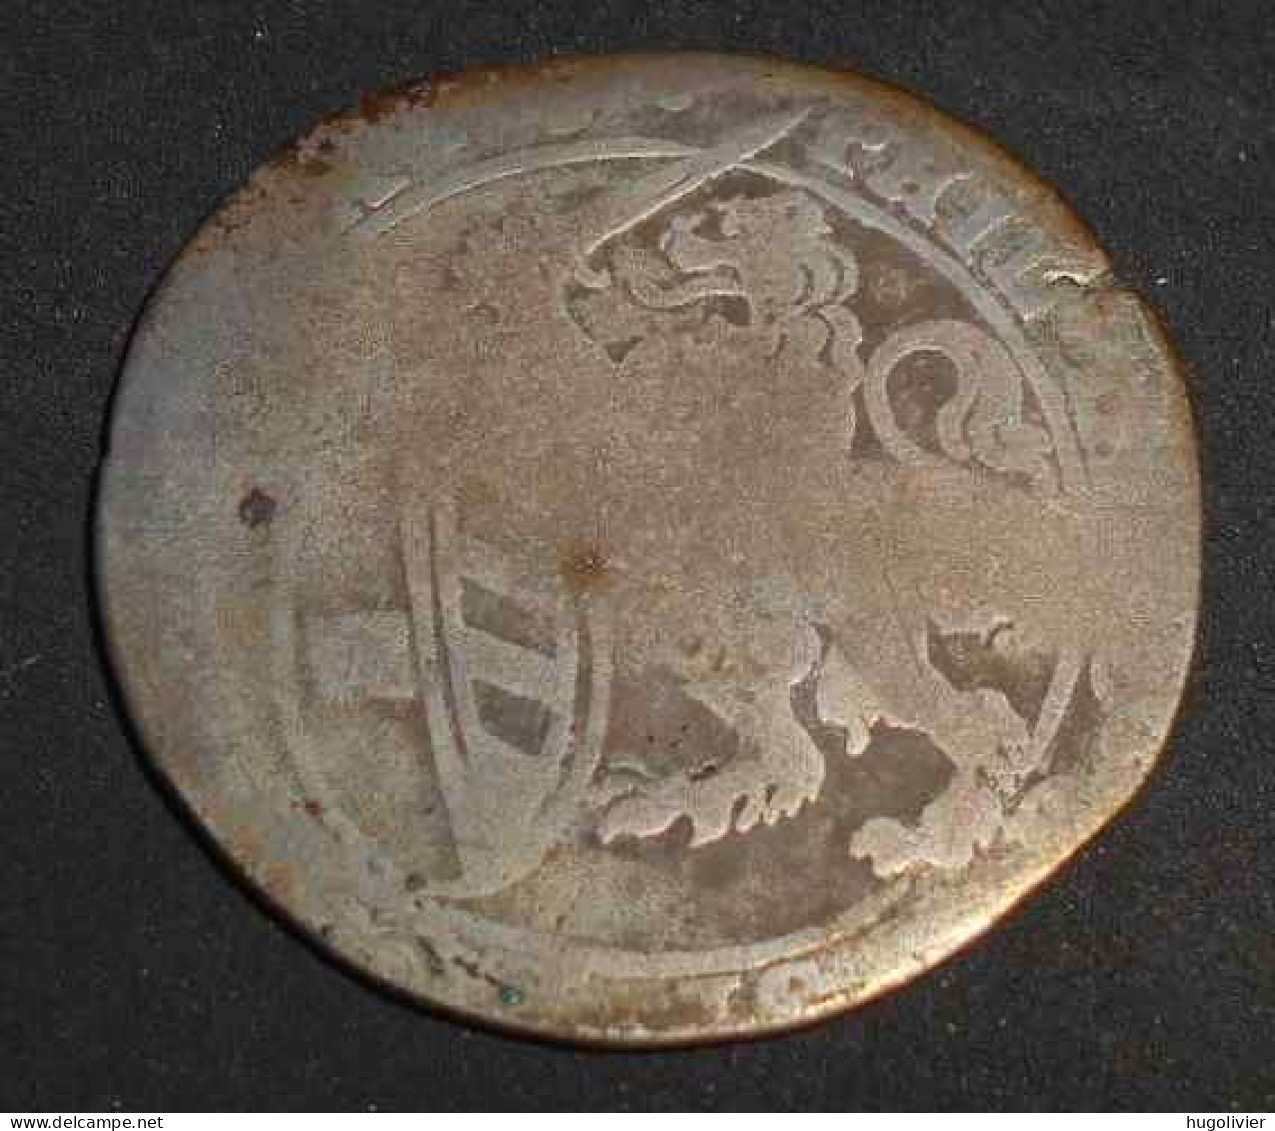 Ancienne Monnaie 1622 Escalin Argent Philippe IV (IIII) Bruxelles (?) - 1556-1713 Pays-Bas Espagols